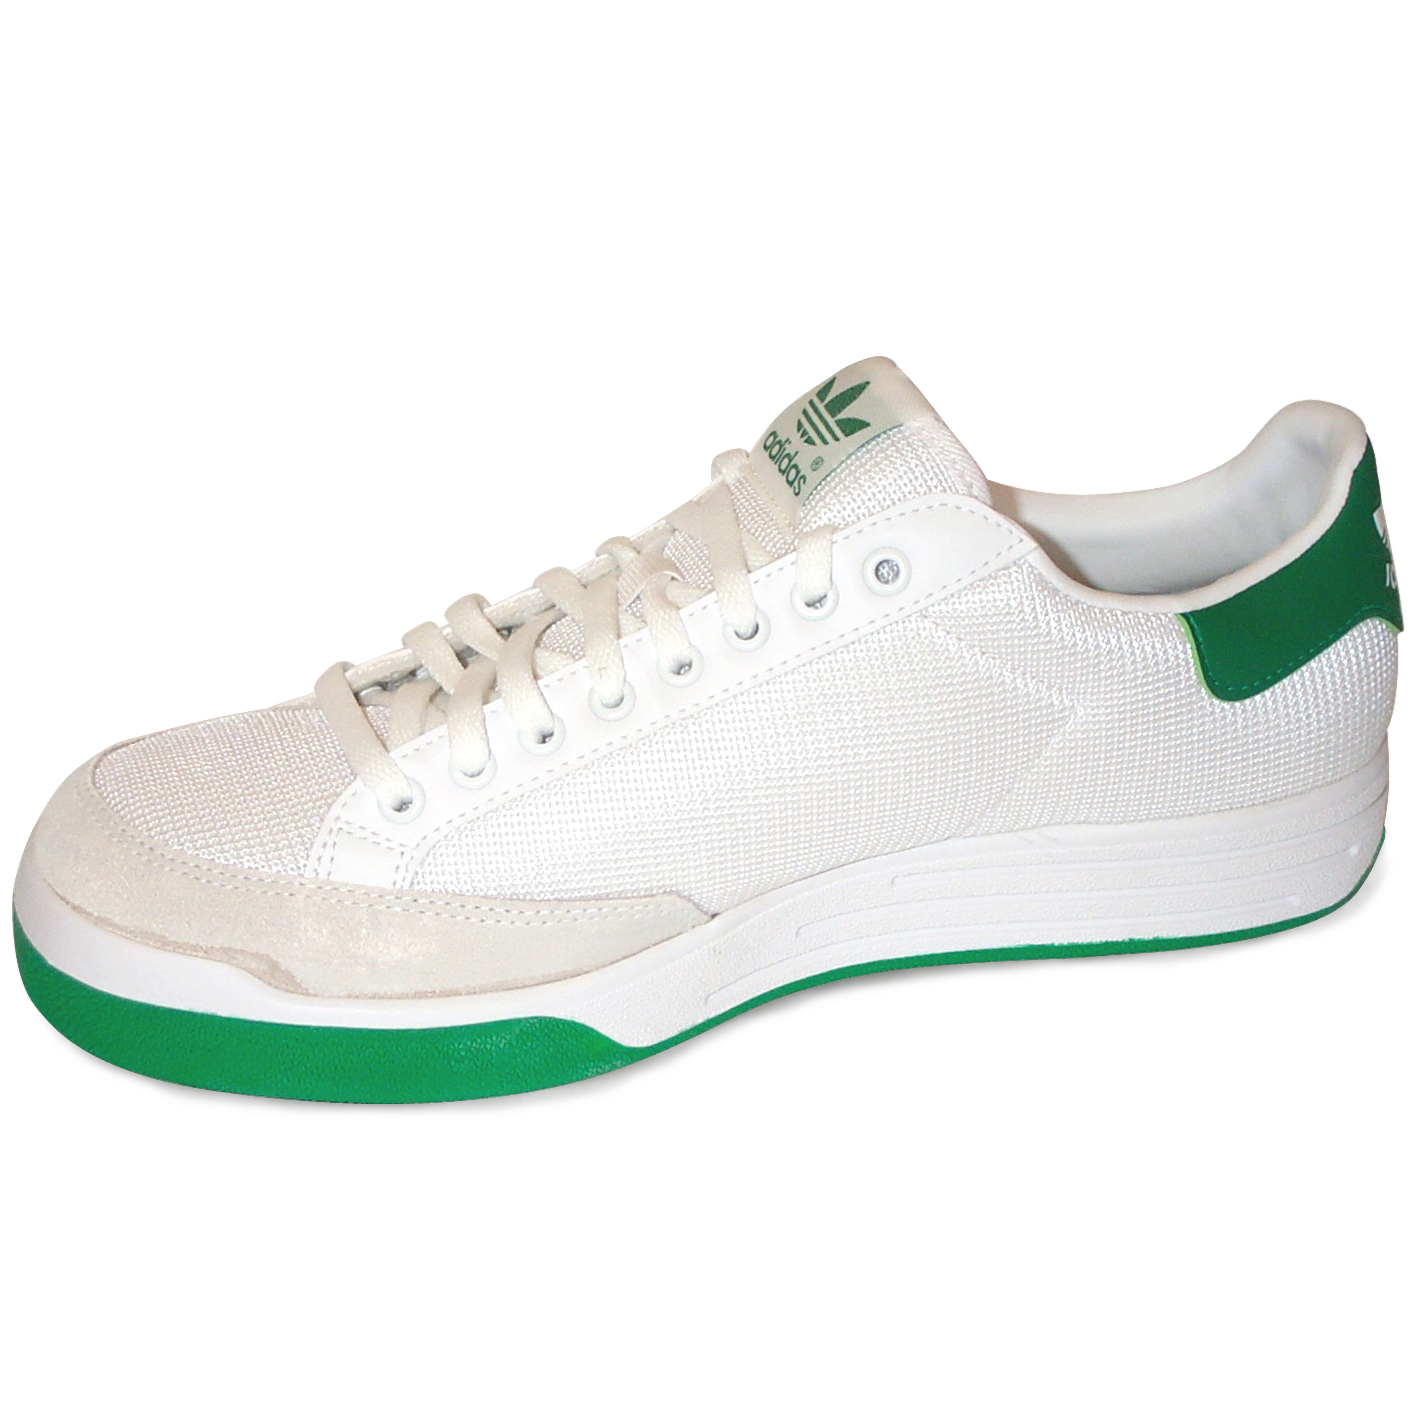 Adidas Rod Laver Super Tennis Shoes – White/Green World Footbag